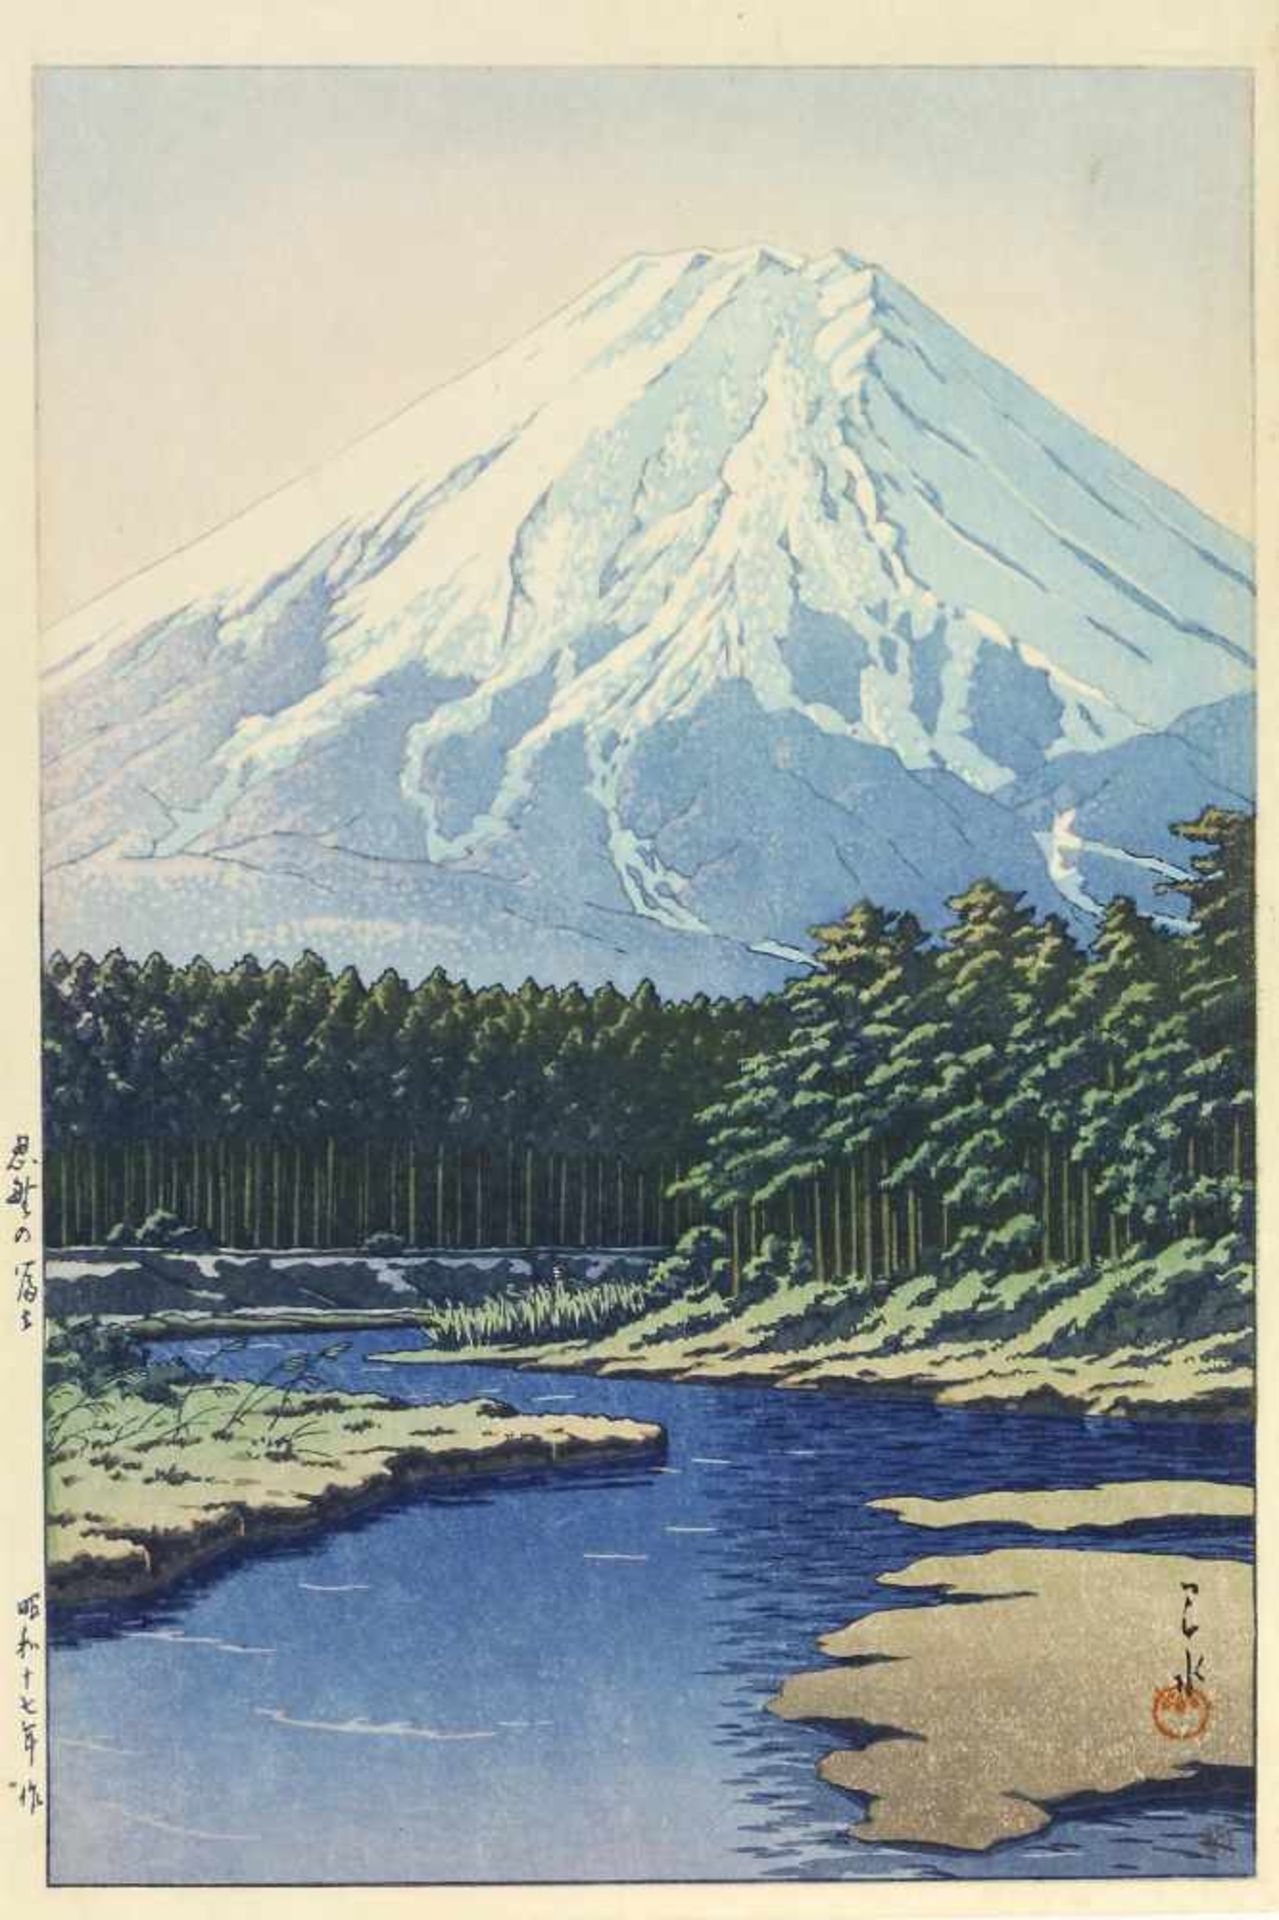 Japanischer Farbholzschnitt, Hasui, Kawase (1883 - 1957)Der Berg Fuji, Oshino. Farbholzschnitt auf